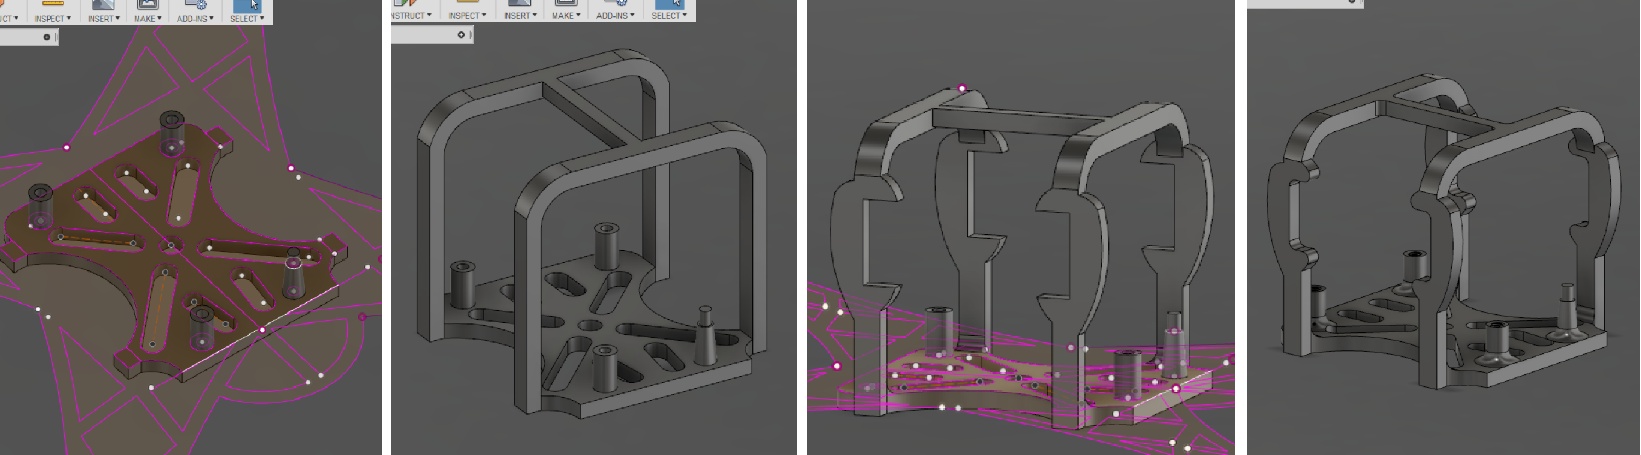 Quad cage frame model in Autodesk Fusion 360